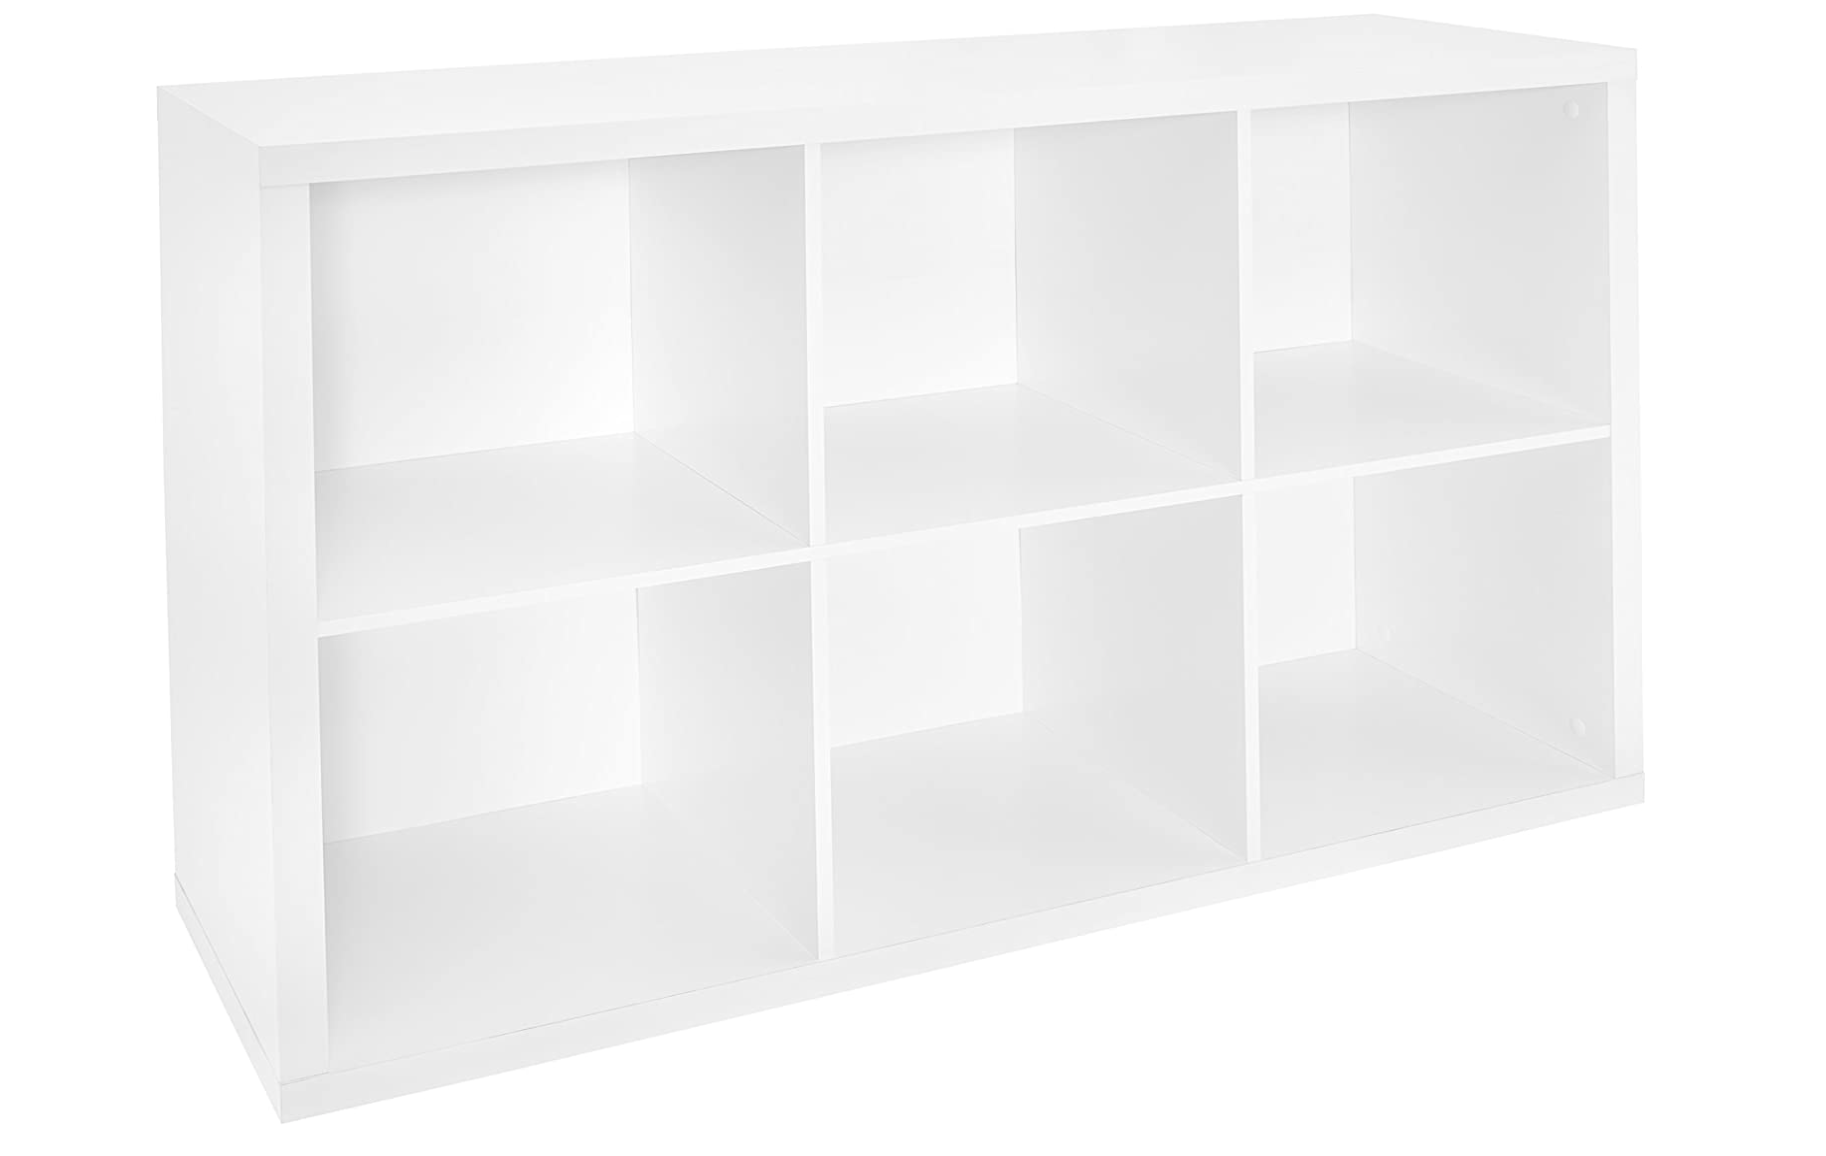 HOMIDEC 6-Cube Storage Organizer Shelf Review & How to 